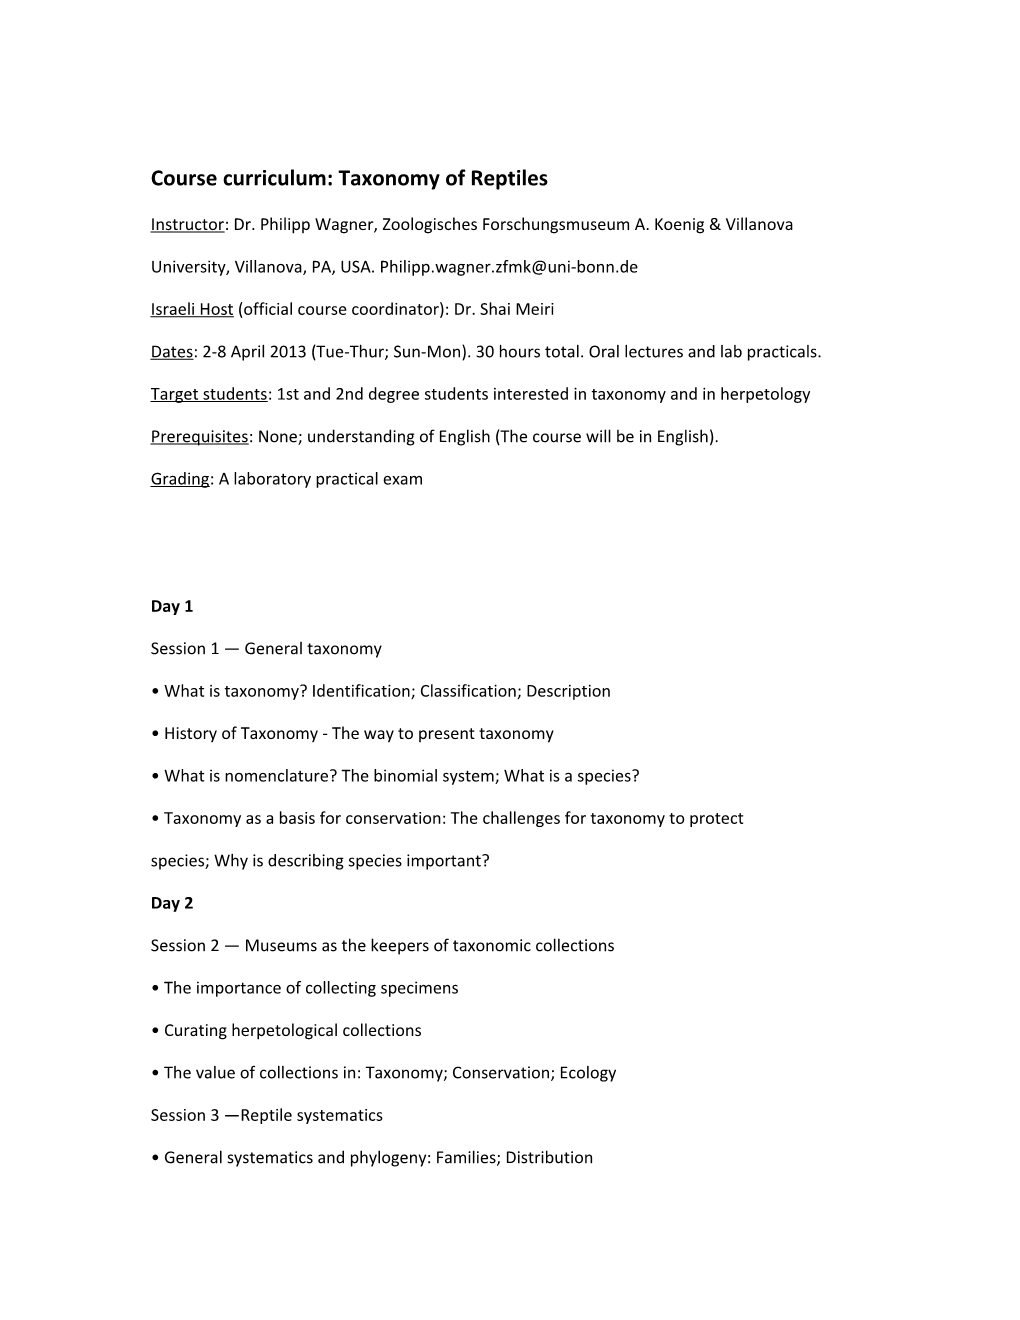 Course Curriculum: Taxonomy of Reptiles